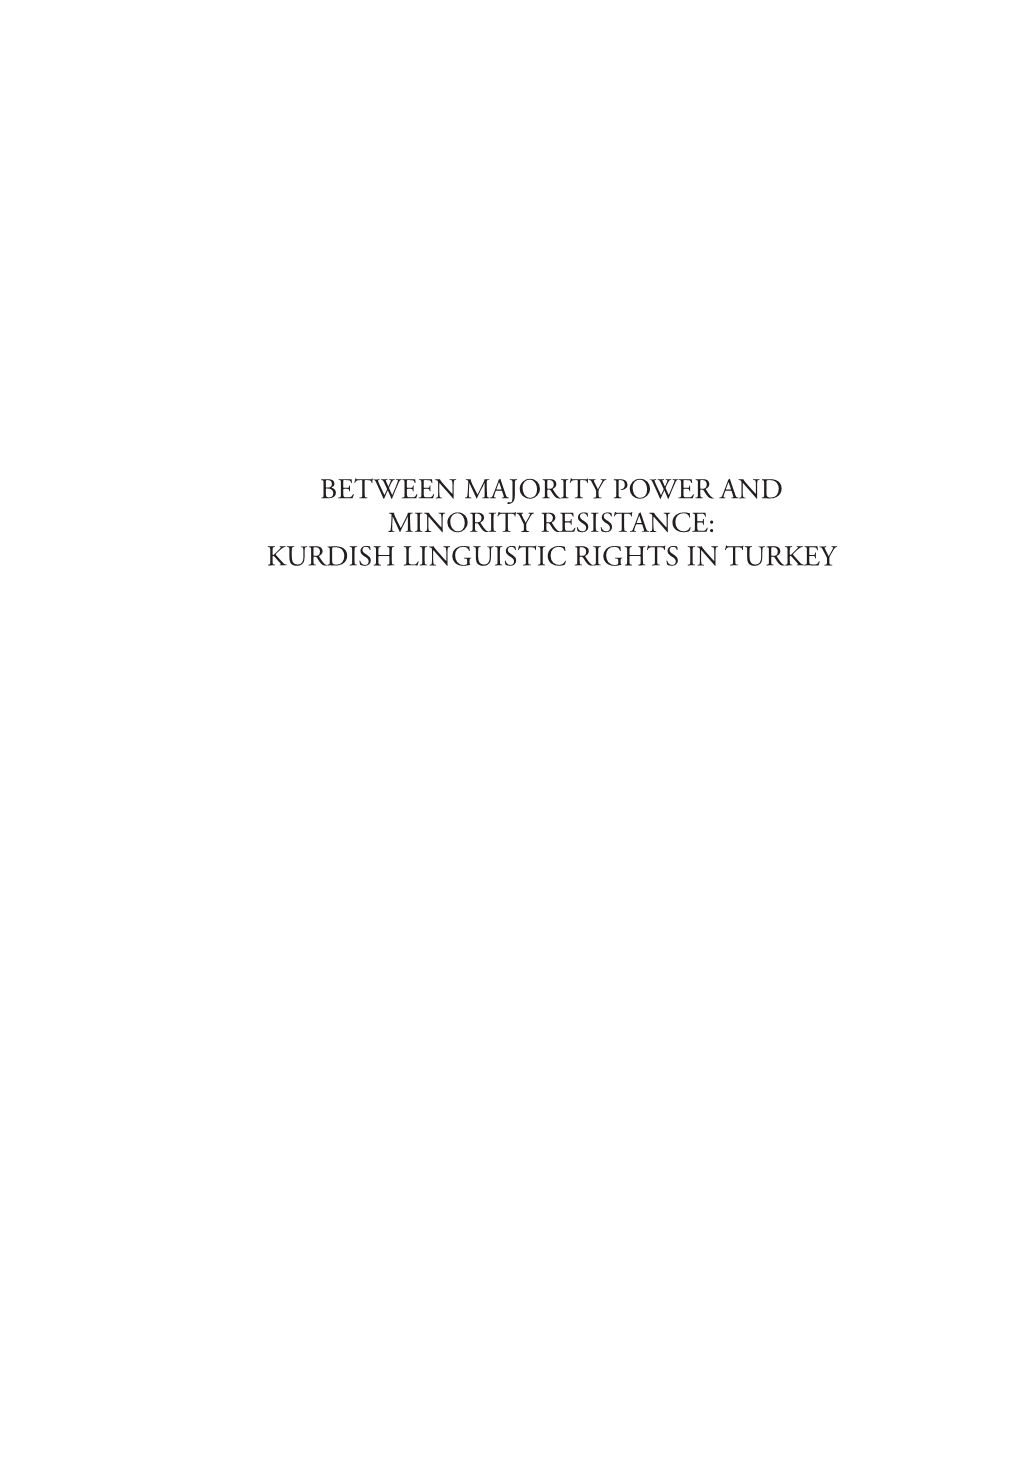 Between Majority Power and Minority Resistance: Kurdish Linguistic Rights in Turkey